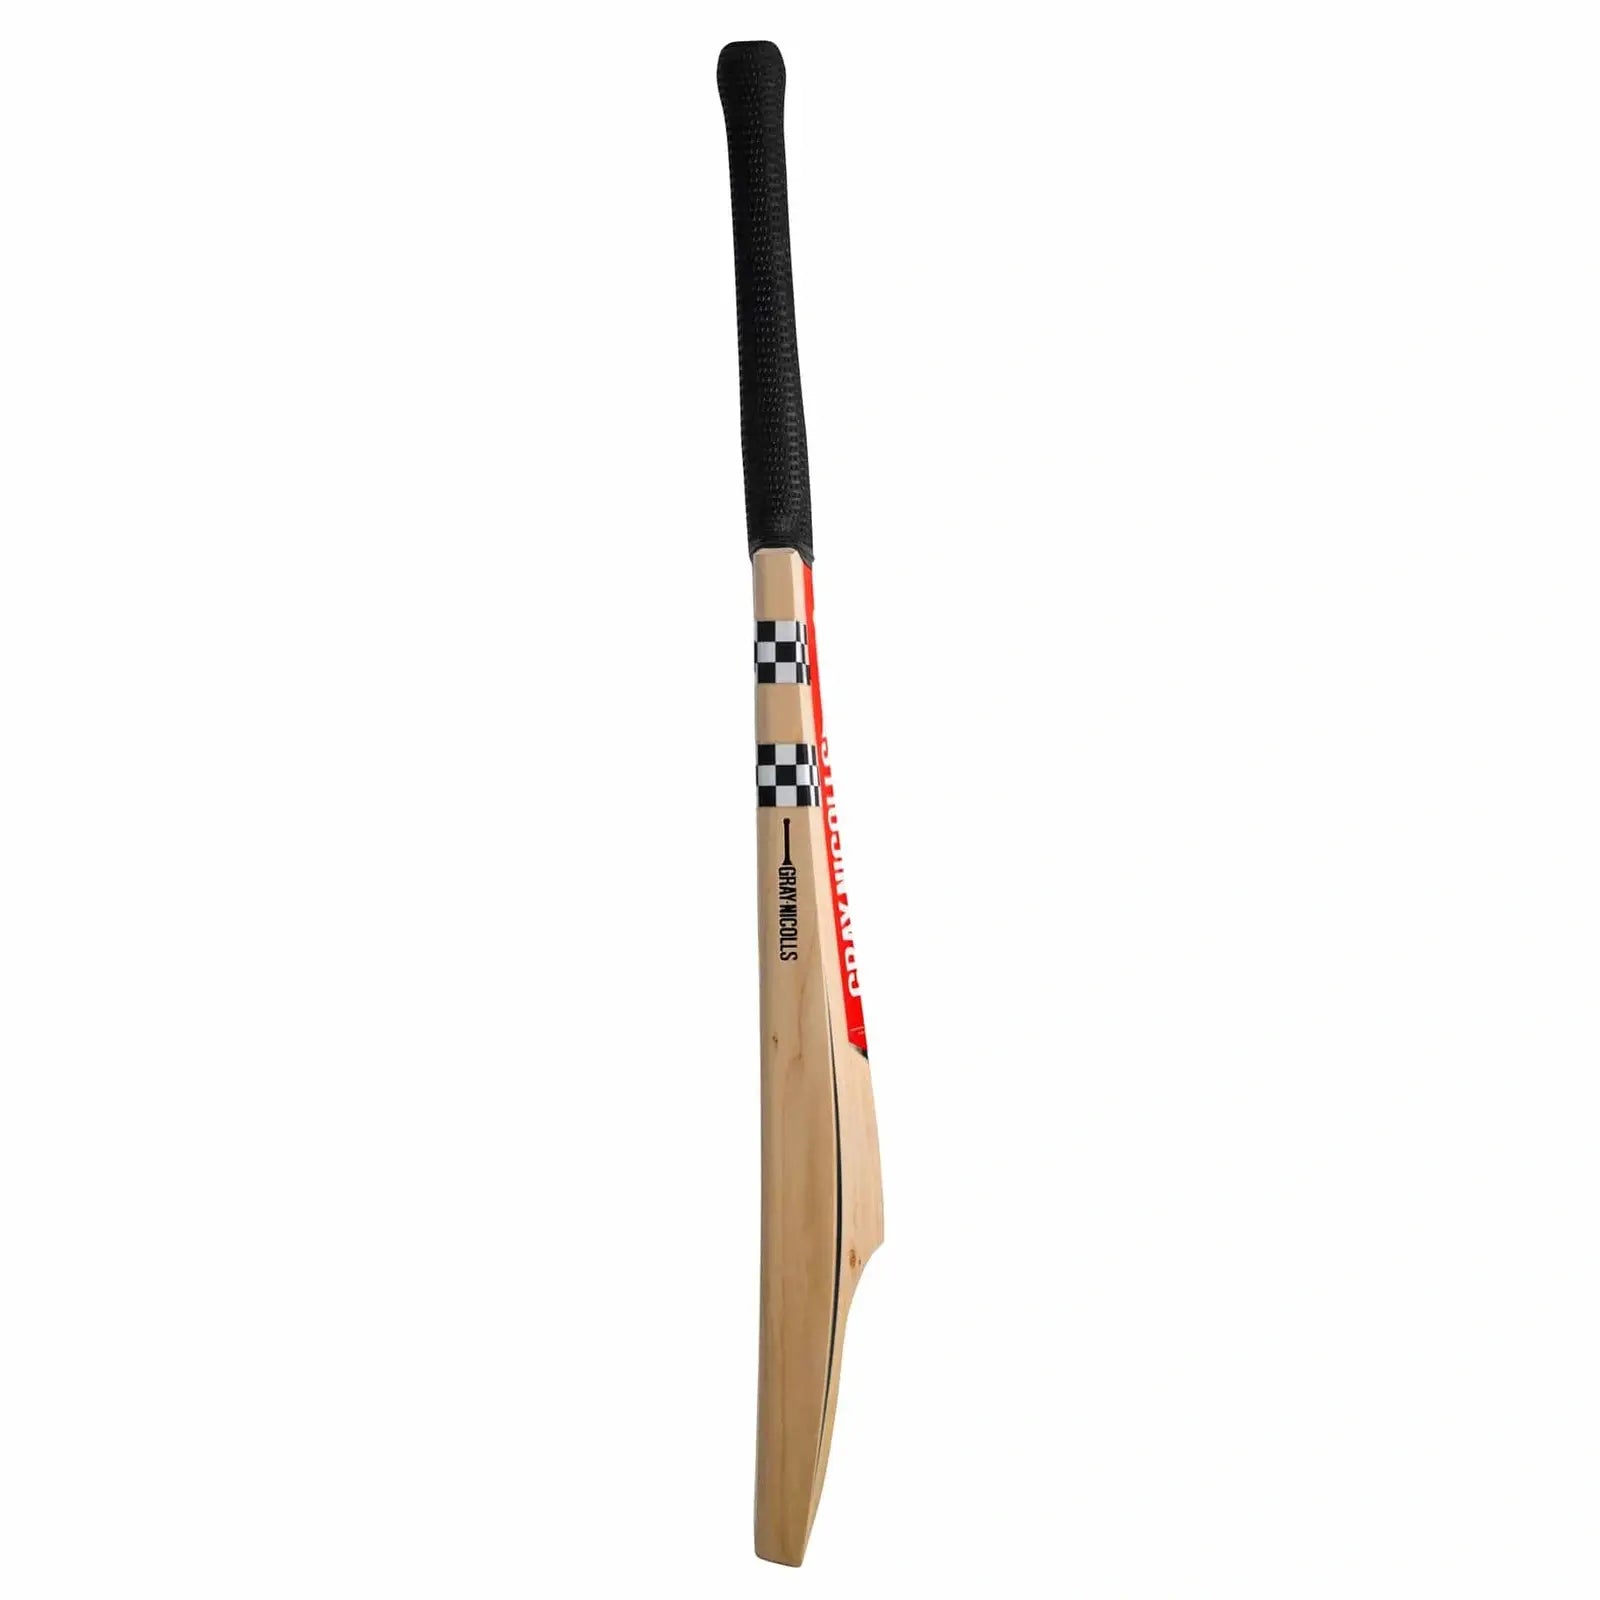 Gray Nicolls Cricket Bats Short Handle / 2'7-2'9 GN SCOOP PRO BALANCE 2000 BAT